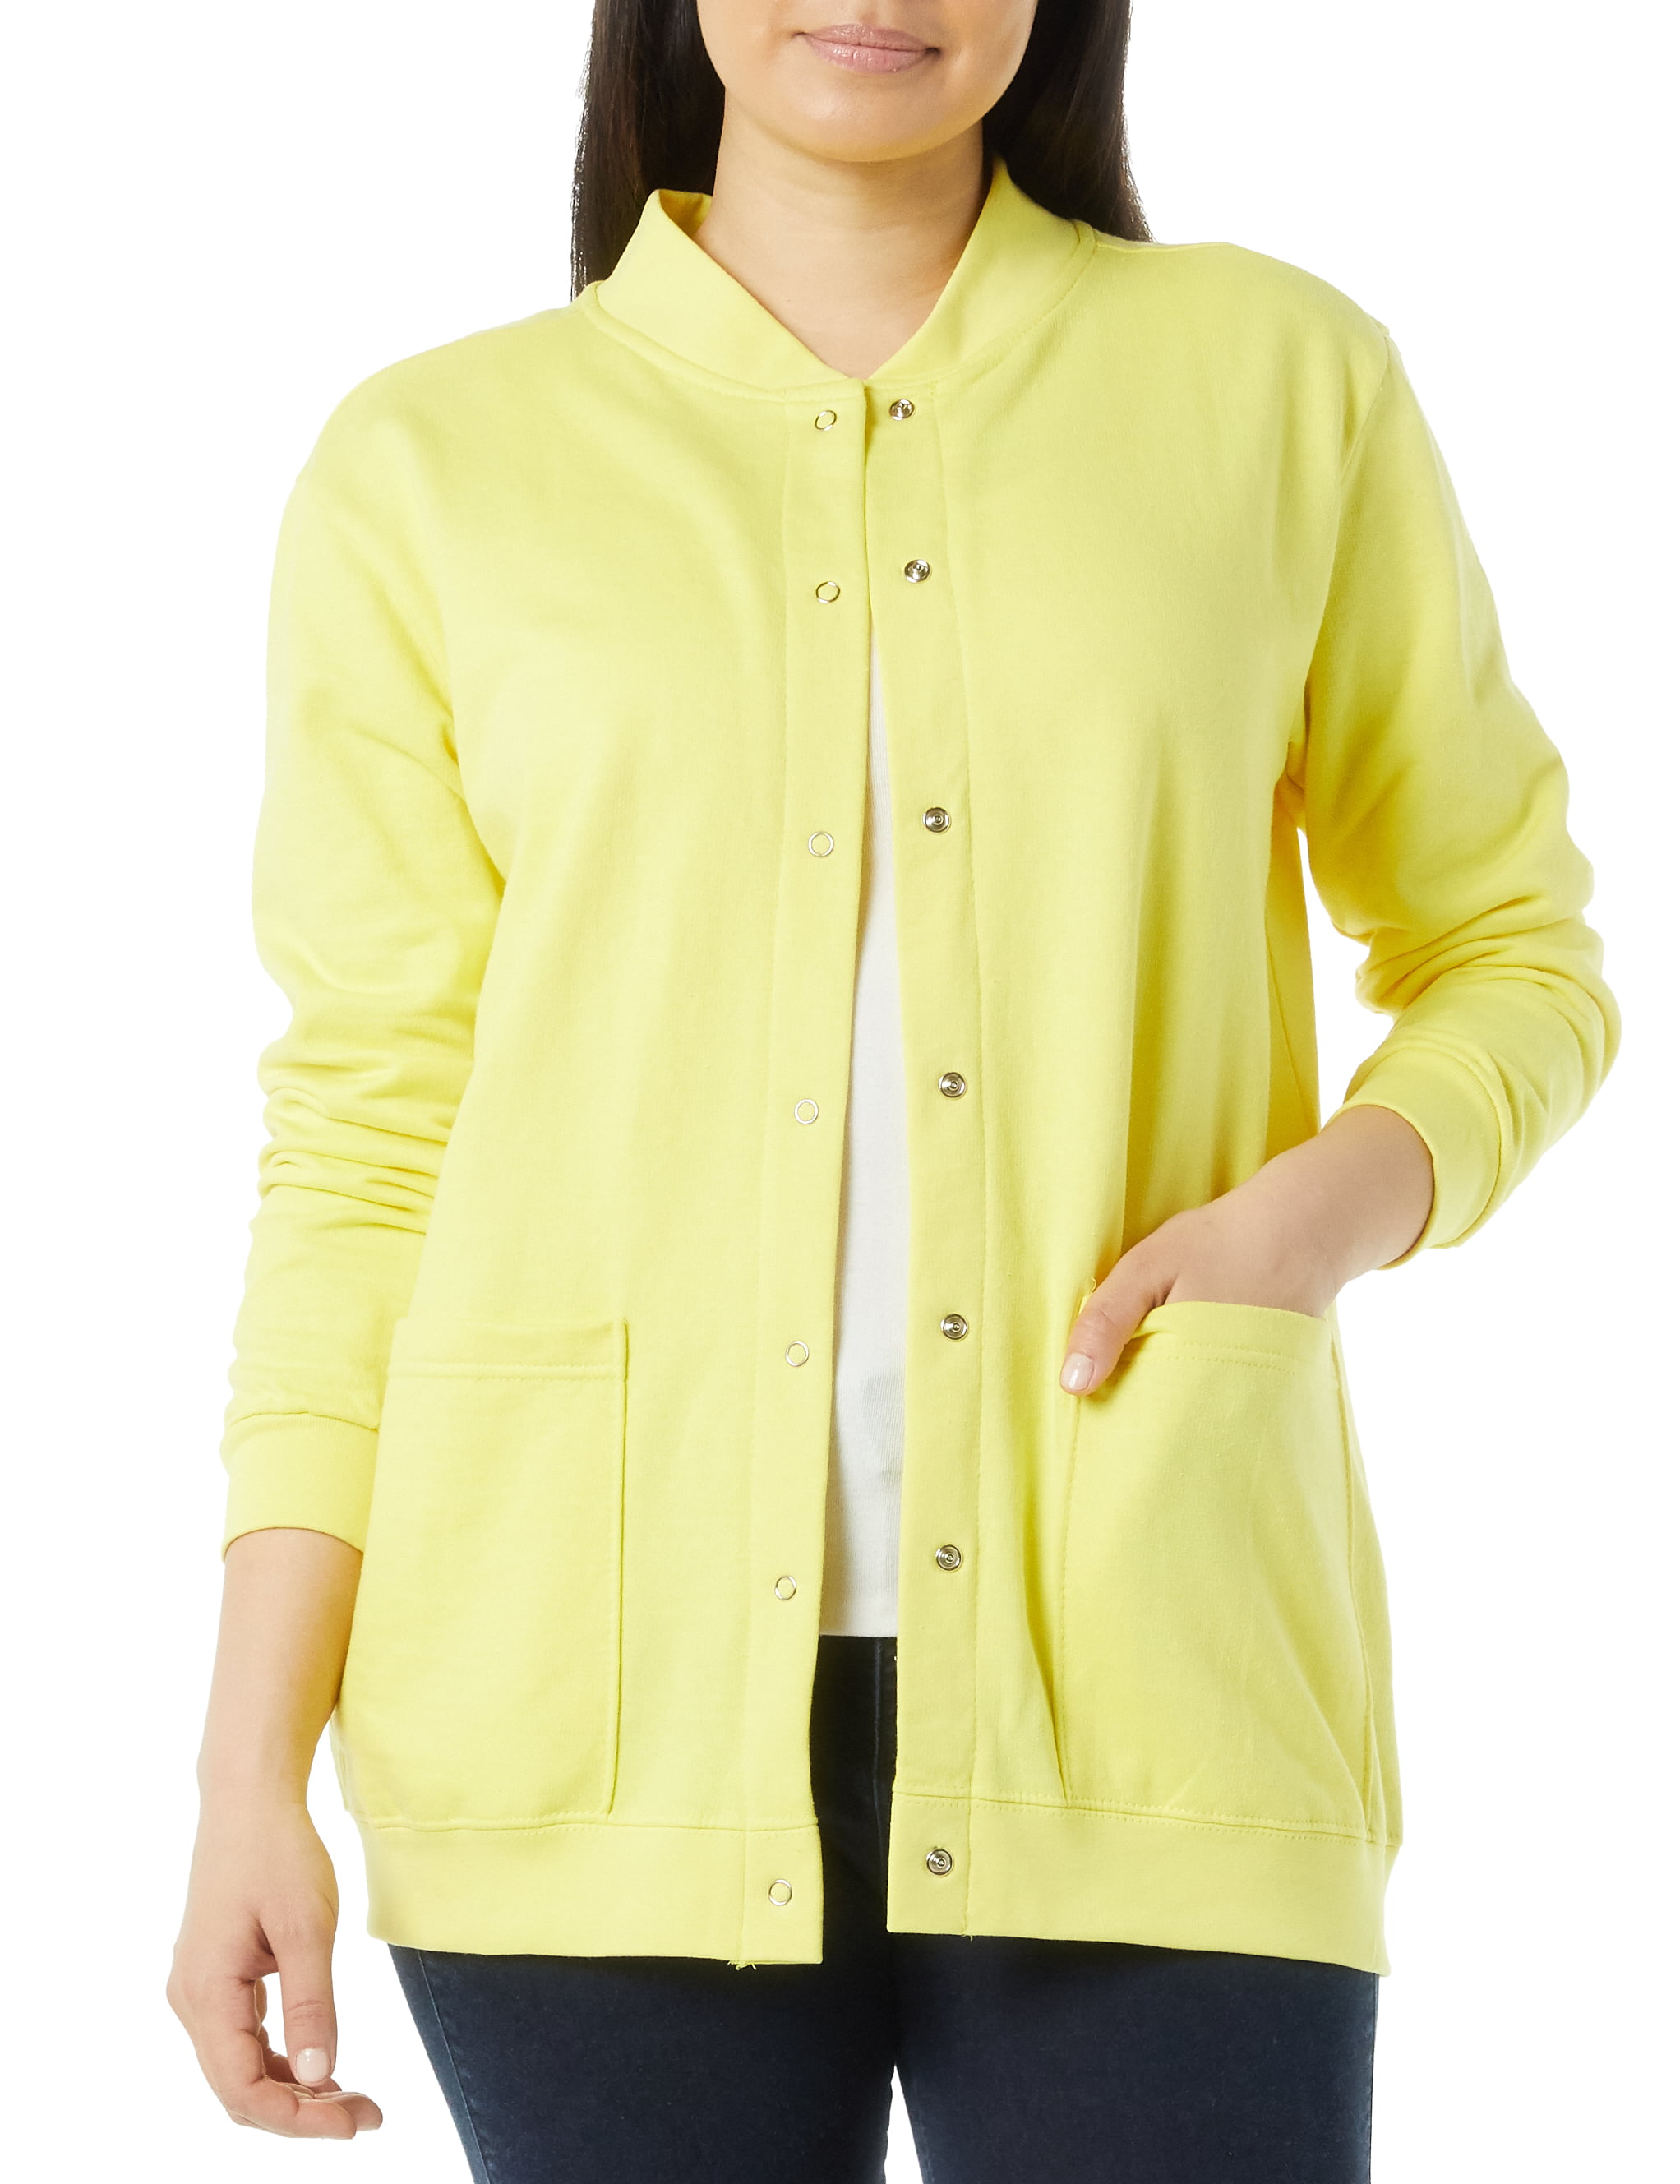 AmeriMark Women Fleece Snap Button Cardigan Sweatshirt Coat – Soft Lightweight Warm Long Sleeve with Pockets - Walmart.com